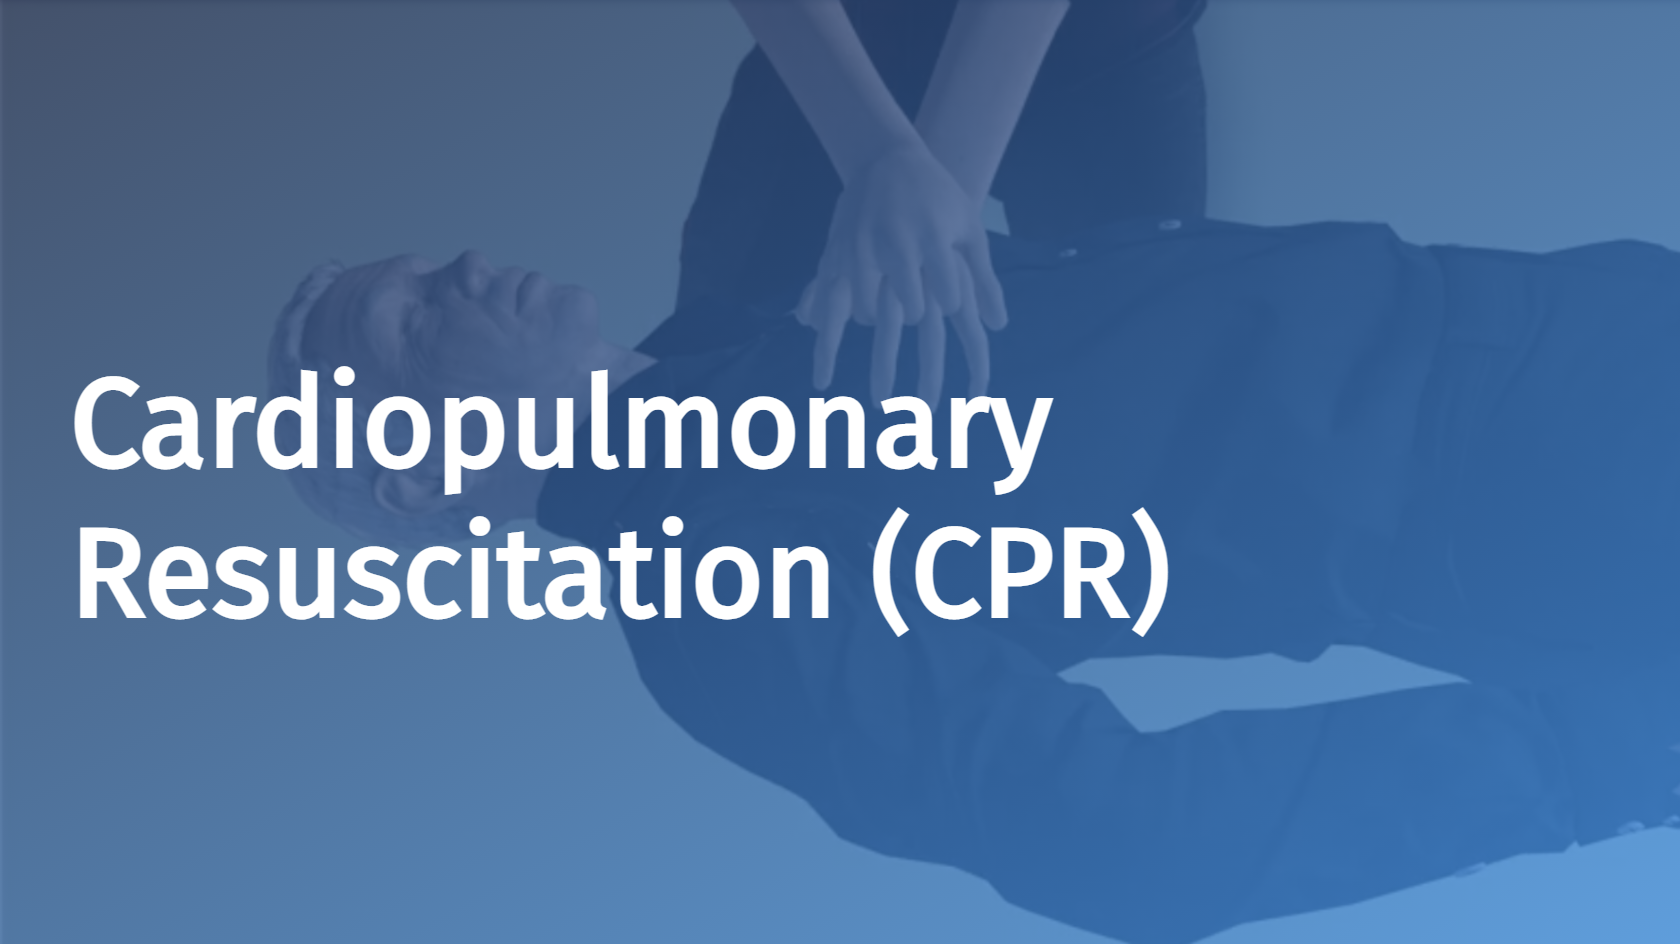 Cardiopulmonary Resuscitation (CPR)